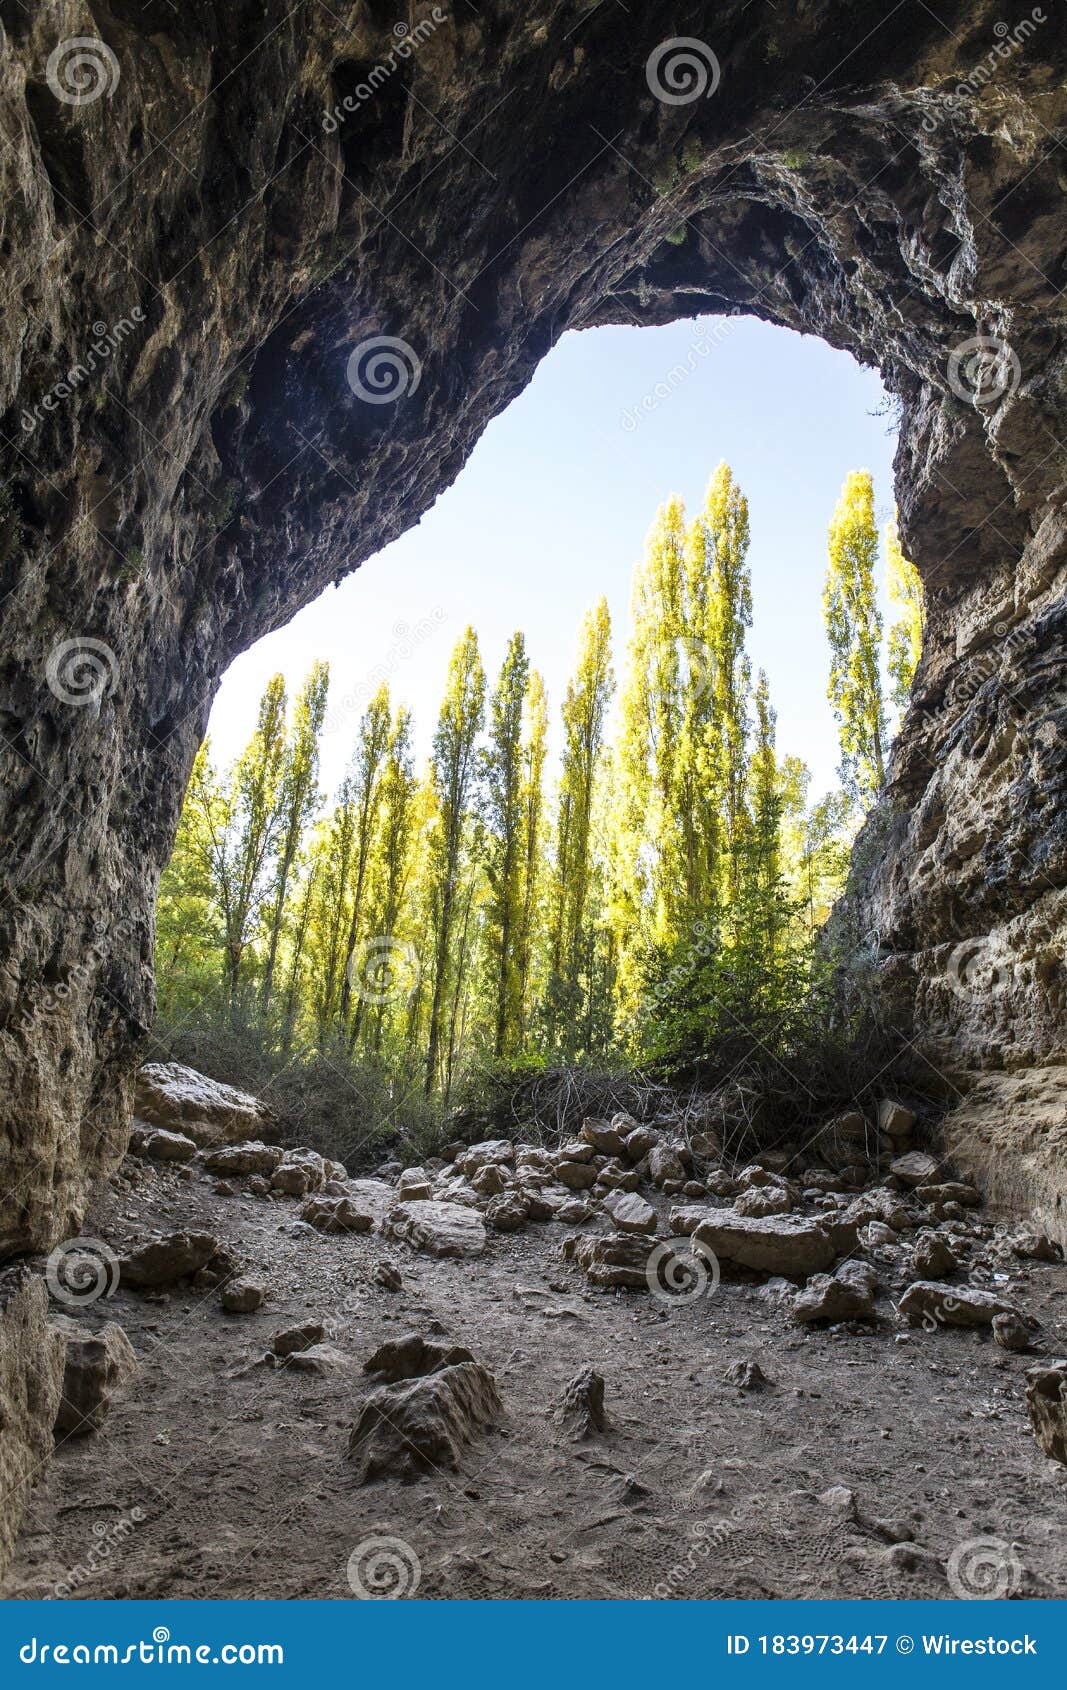 vertical shot of a cave with trees on the background in the senda de la vega park in segovia, spain